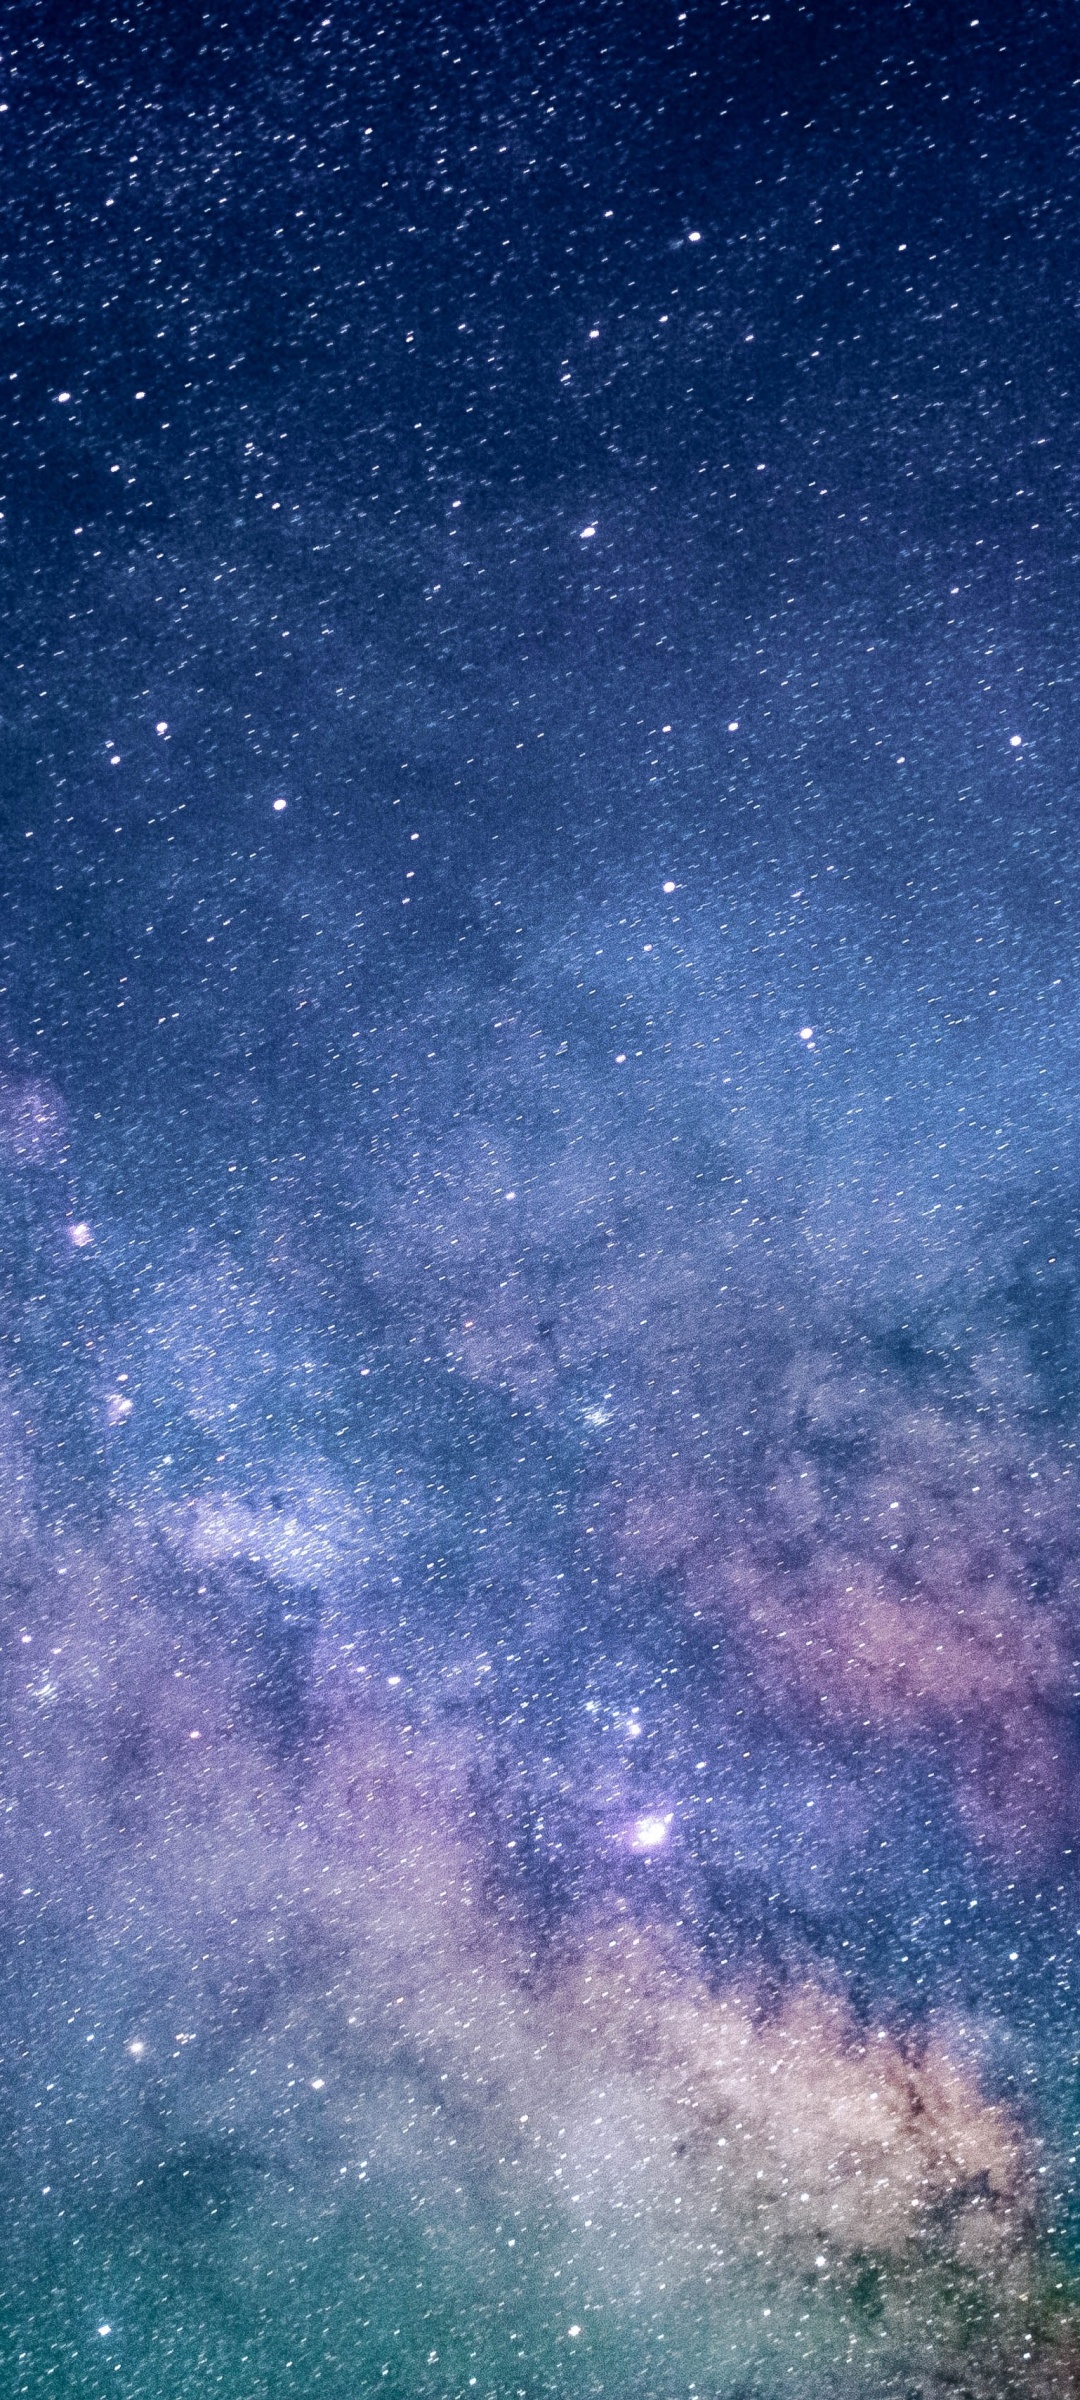 Milky Way Galaxy Wallpaper Iphone